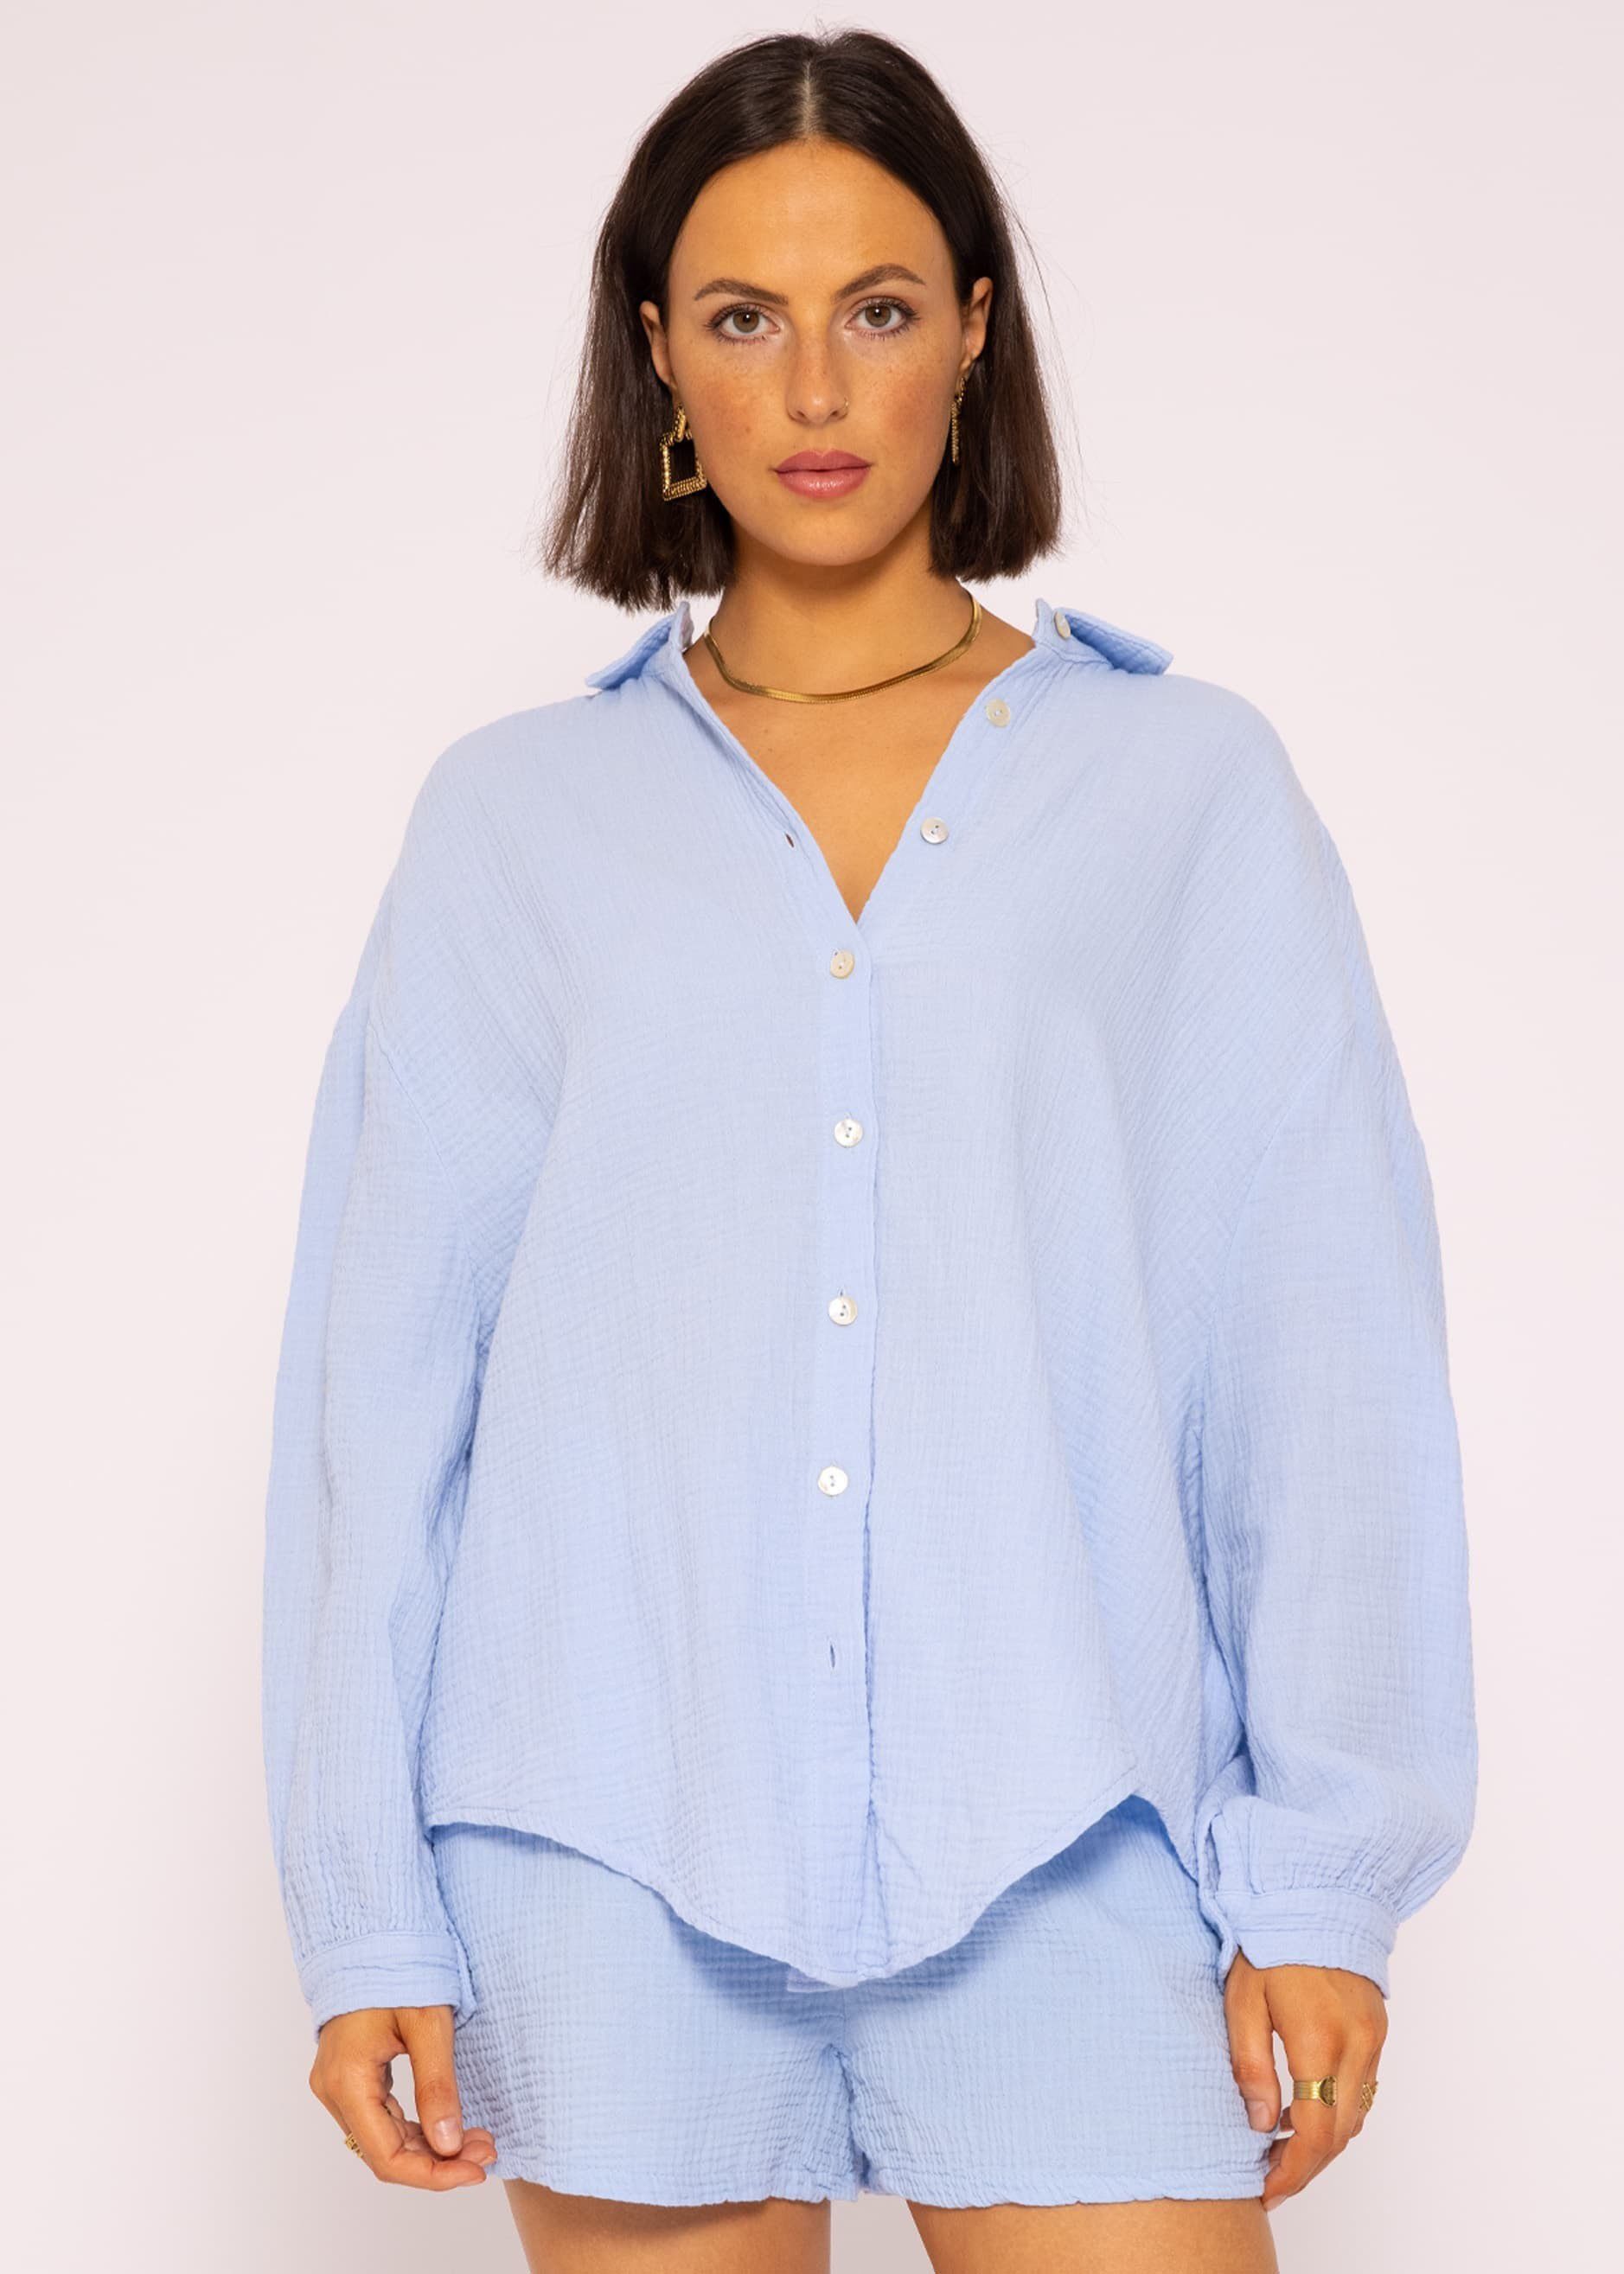 SASSYCLASSY Longbluse Oversize Musselin Bluse Damen Langarm Hemdbluse lang aus Baumwolle mit V-Ausschnitt, One Size (Gr. 36-48) Hellblau